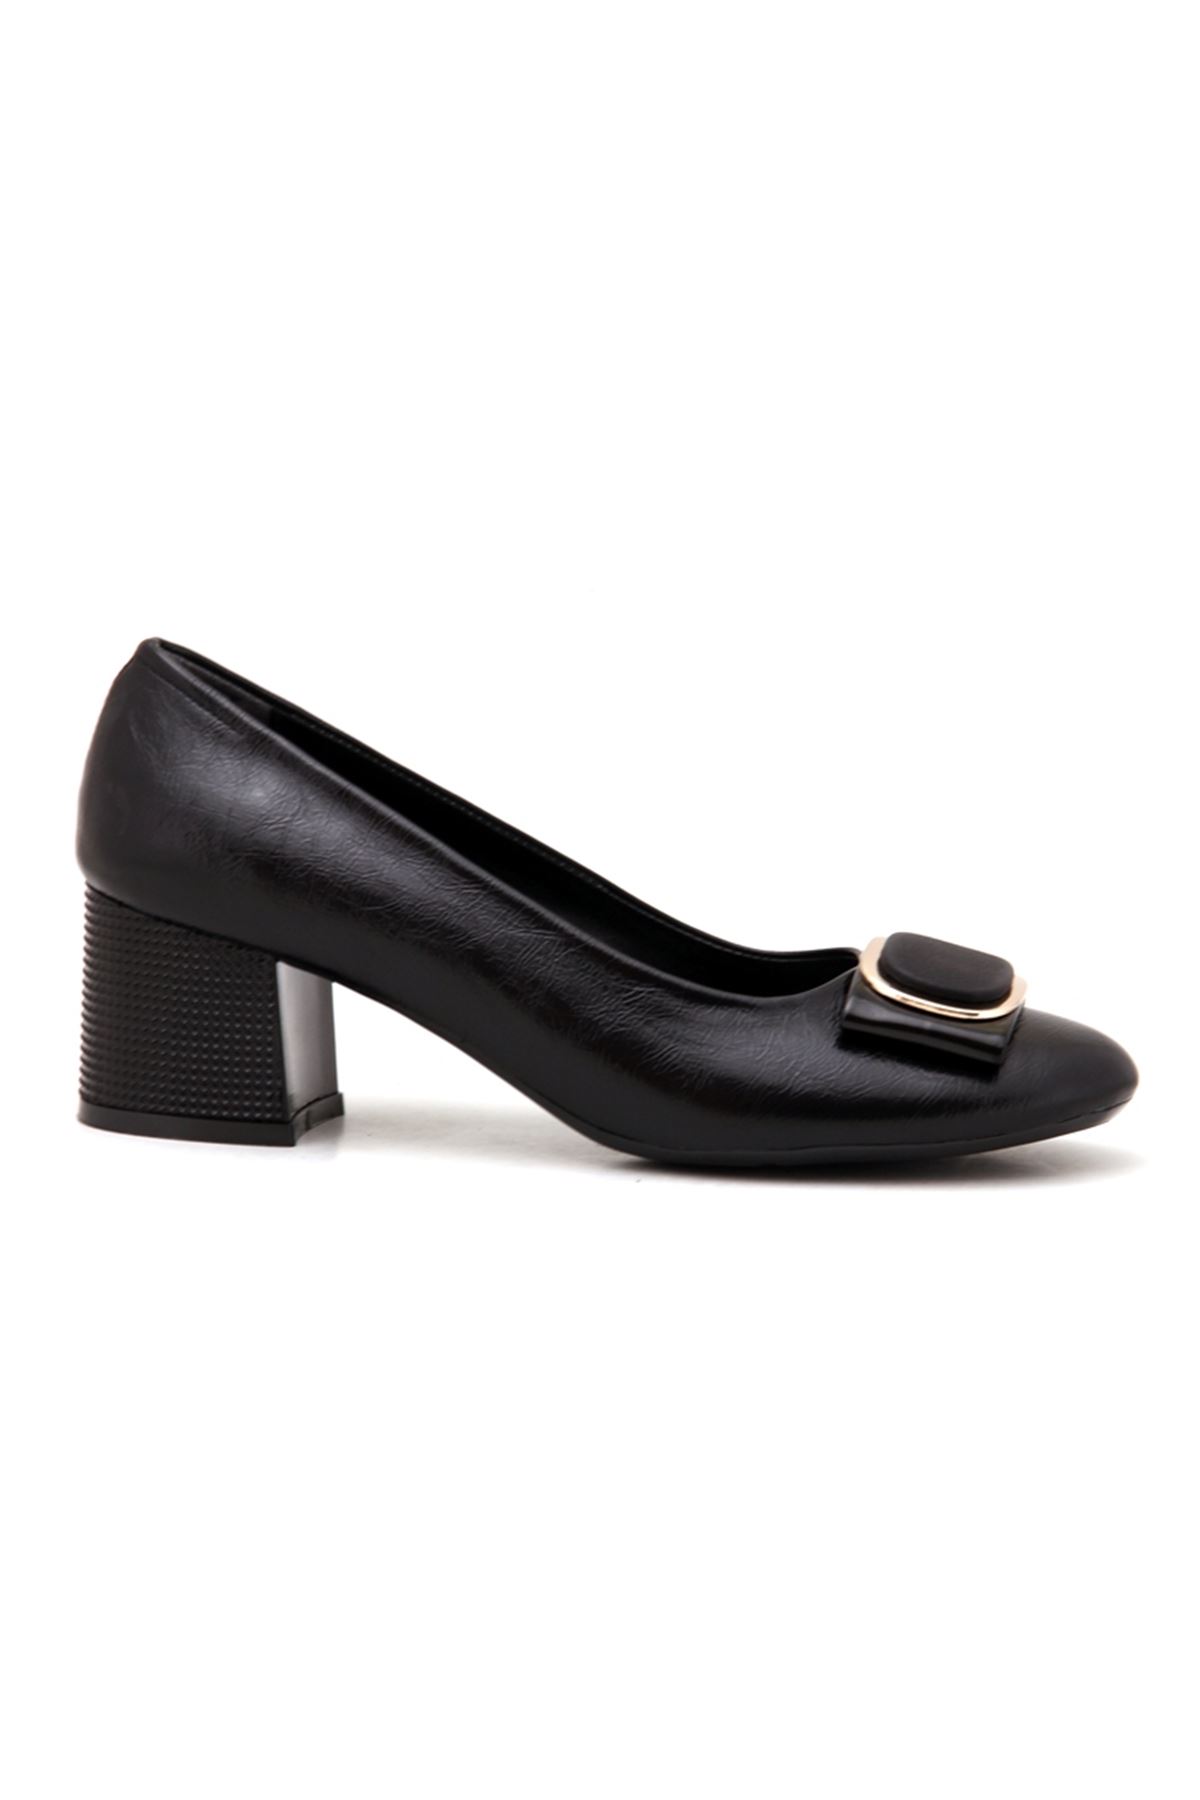 L&L 216 Topuklu Kadın Ayakkabı - Siyah